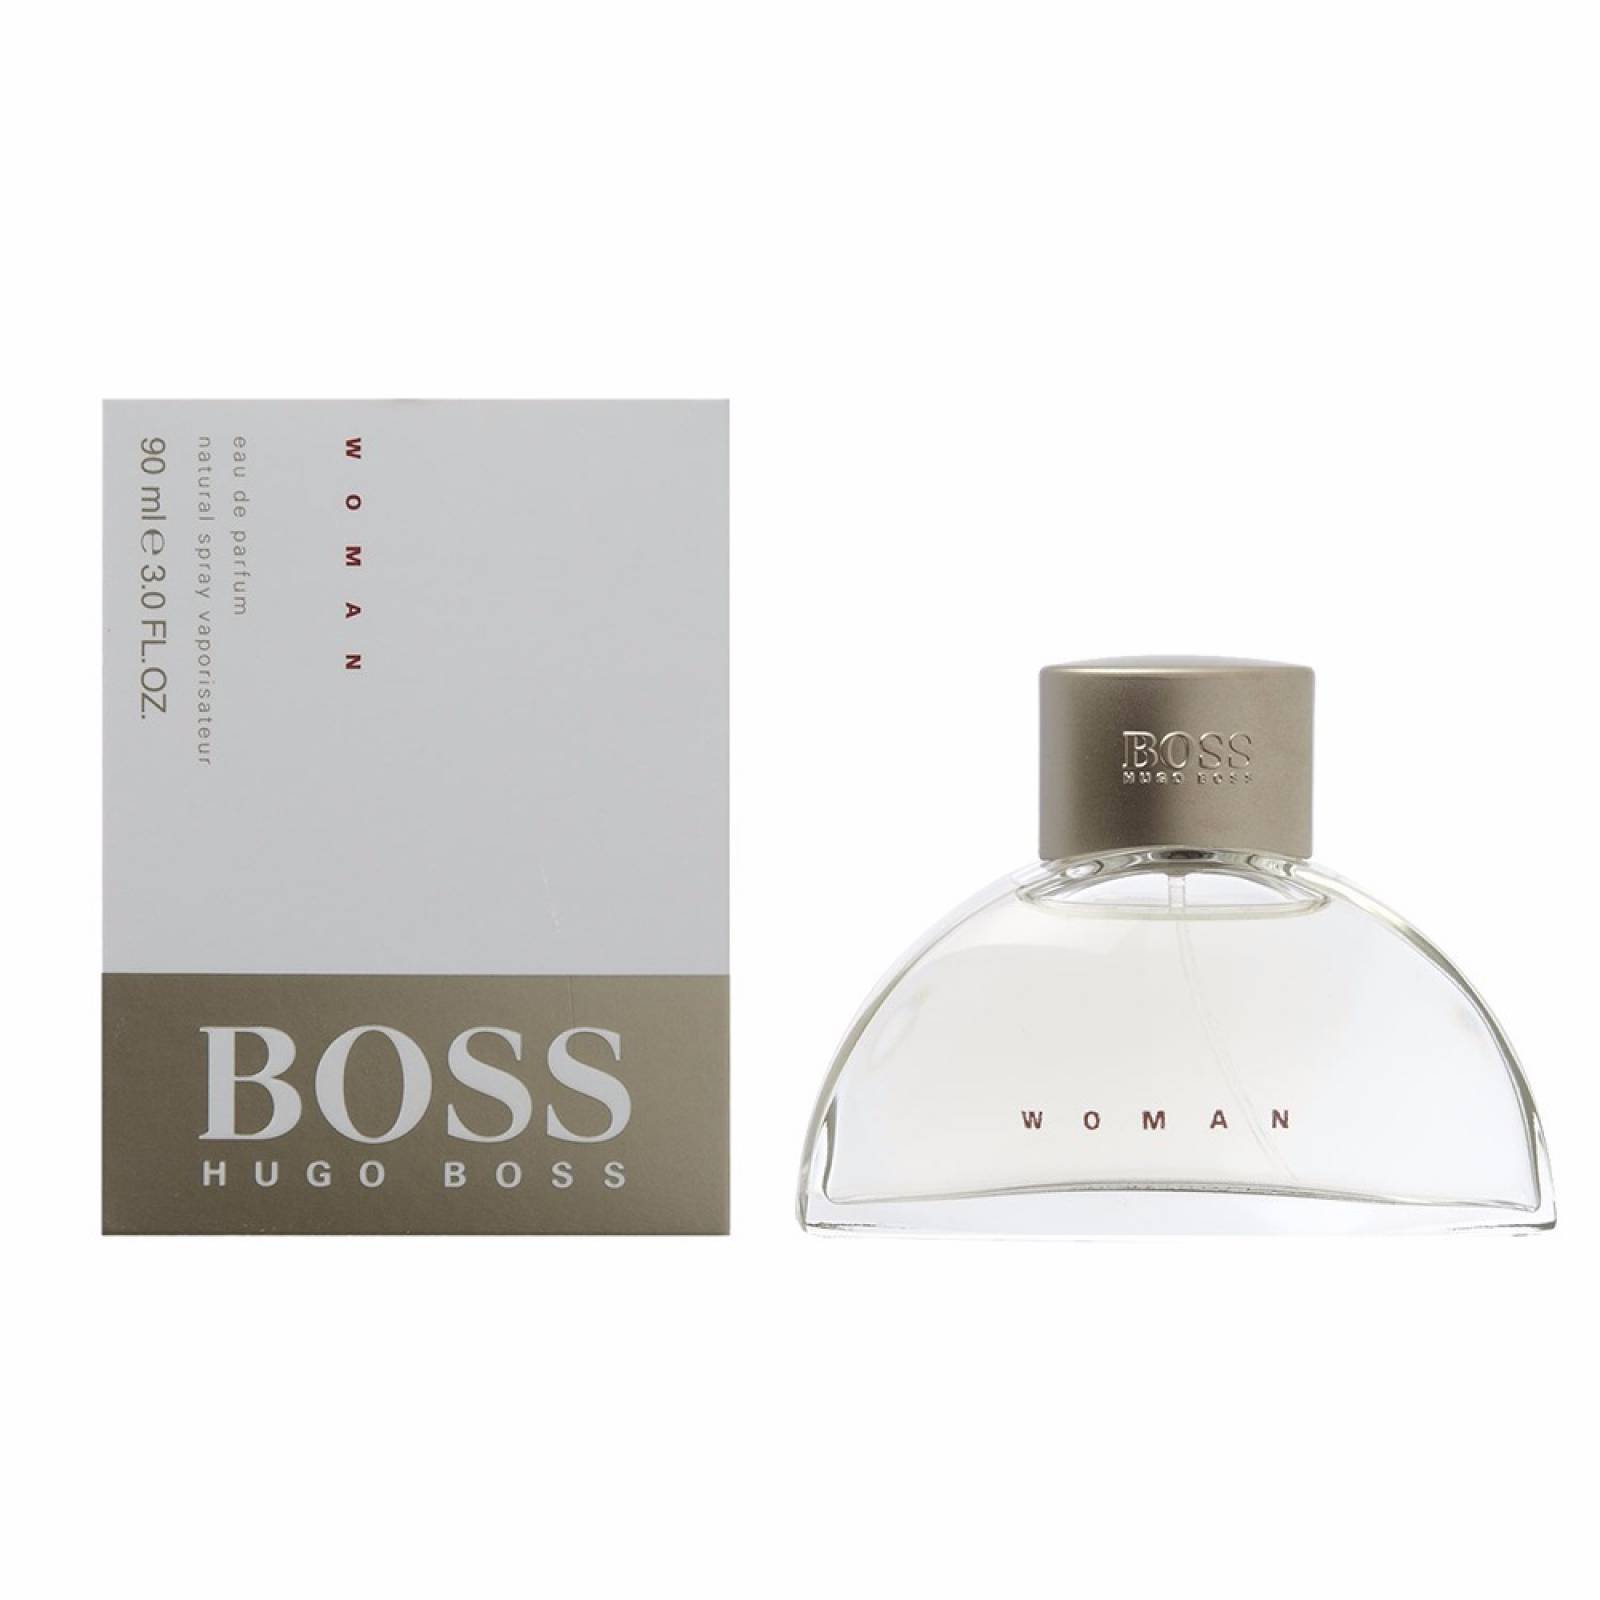 Хуго босс отзывы. Туалетная вода Hugo Boss "Boss woman", 90 ml. Hugo Boss аромат Boss woman. Босс Хьюго босс женские духи. Туалетная вода Хьюго босс женские босс Вумен.